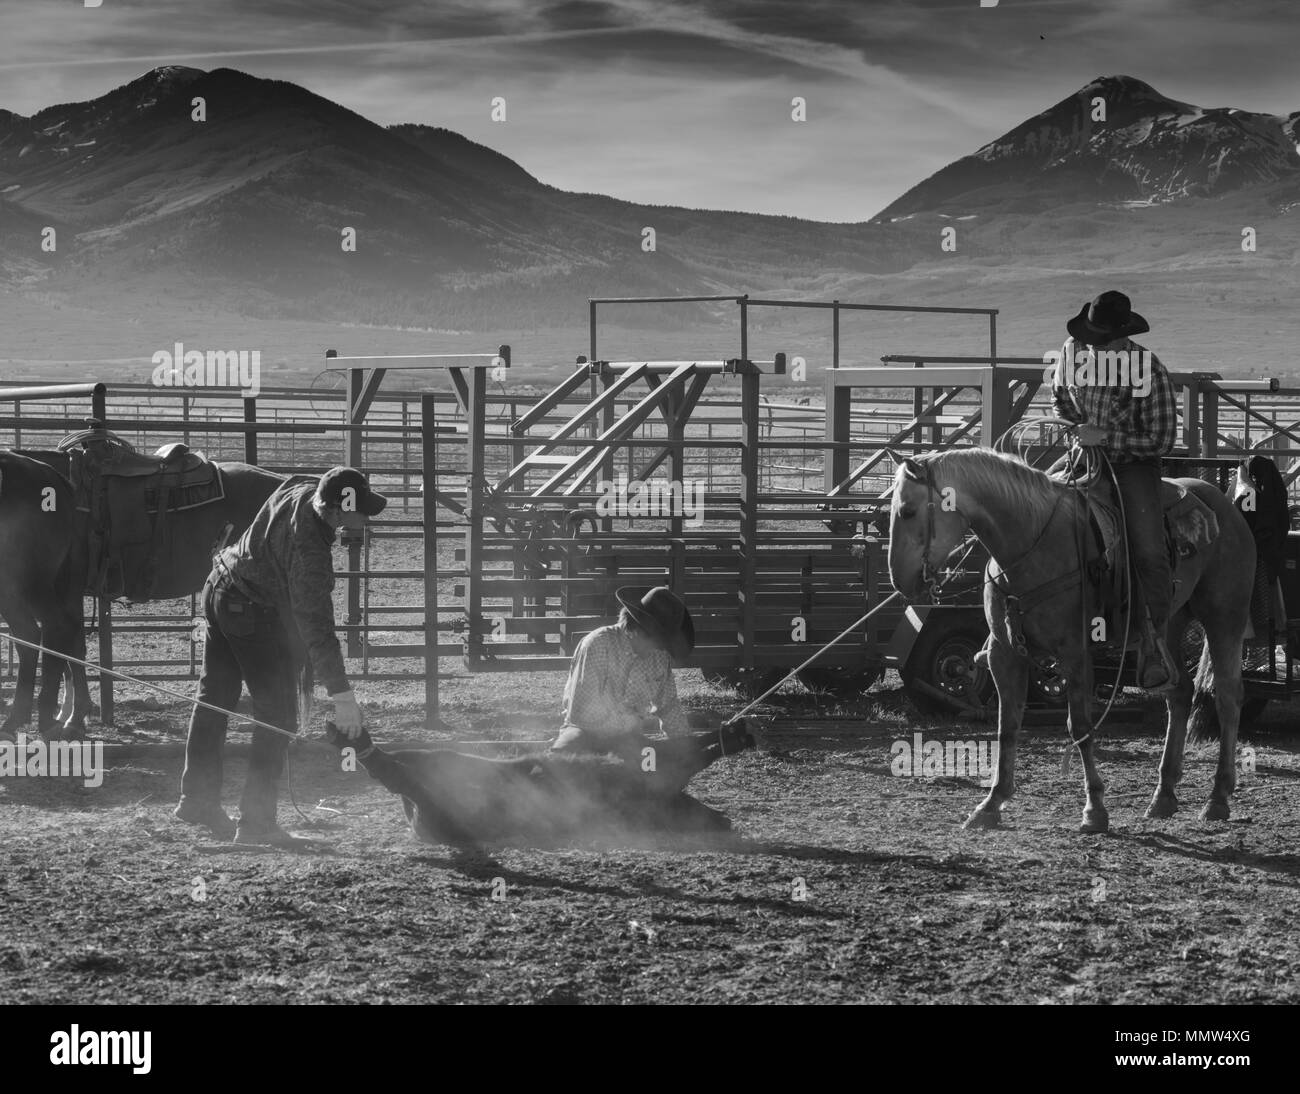 MAY 23, 2017 - LA SAL MOUNTAINS, UTAH -Cowboys brand Cattle near La Sal, Utah off Route 46 near Colorado-Utah border - near Manti-La Sal National Foest Stock Photo